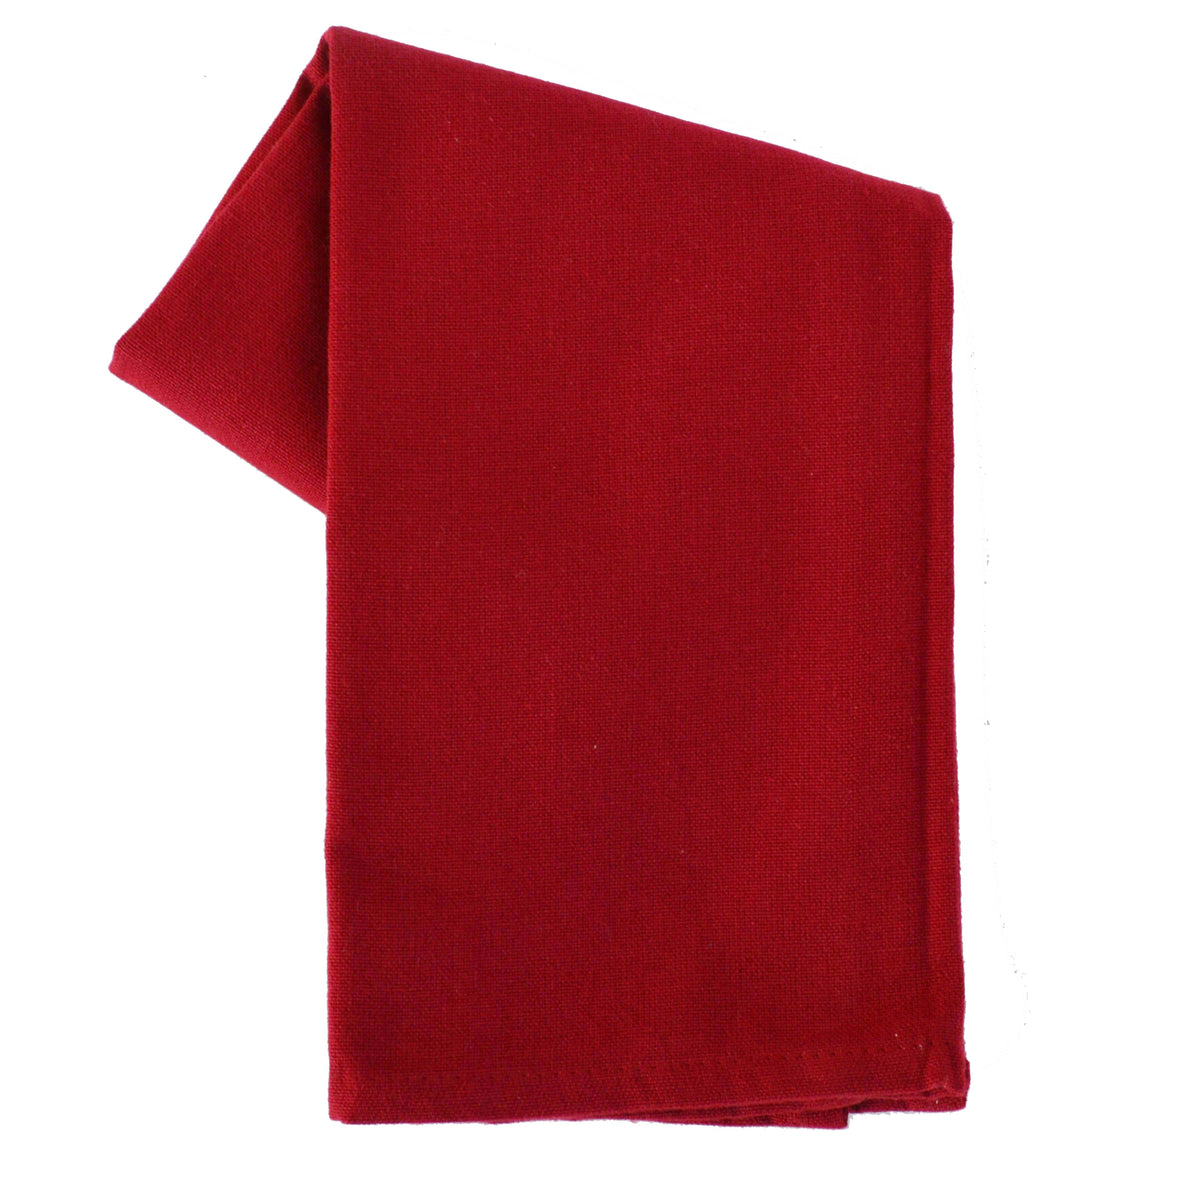 Valentine's Seasonal Towel Set of 3 - Bright Red and Black